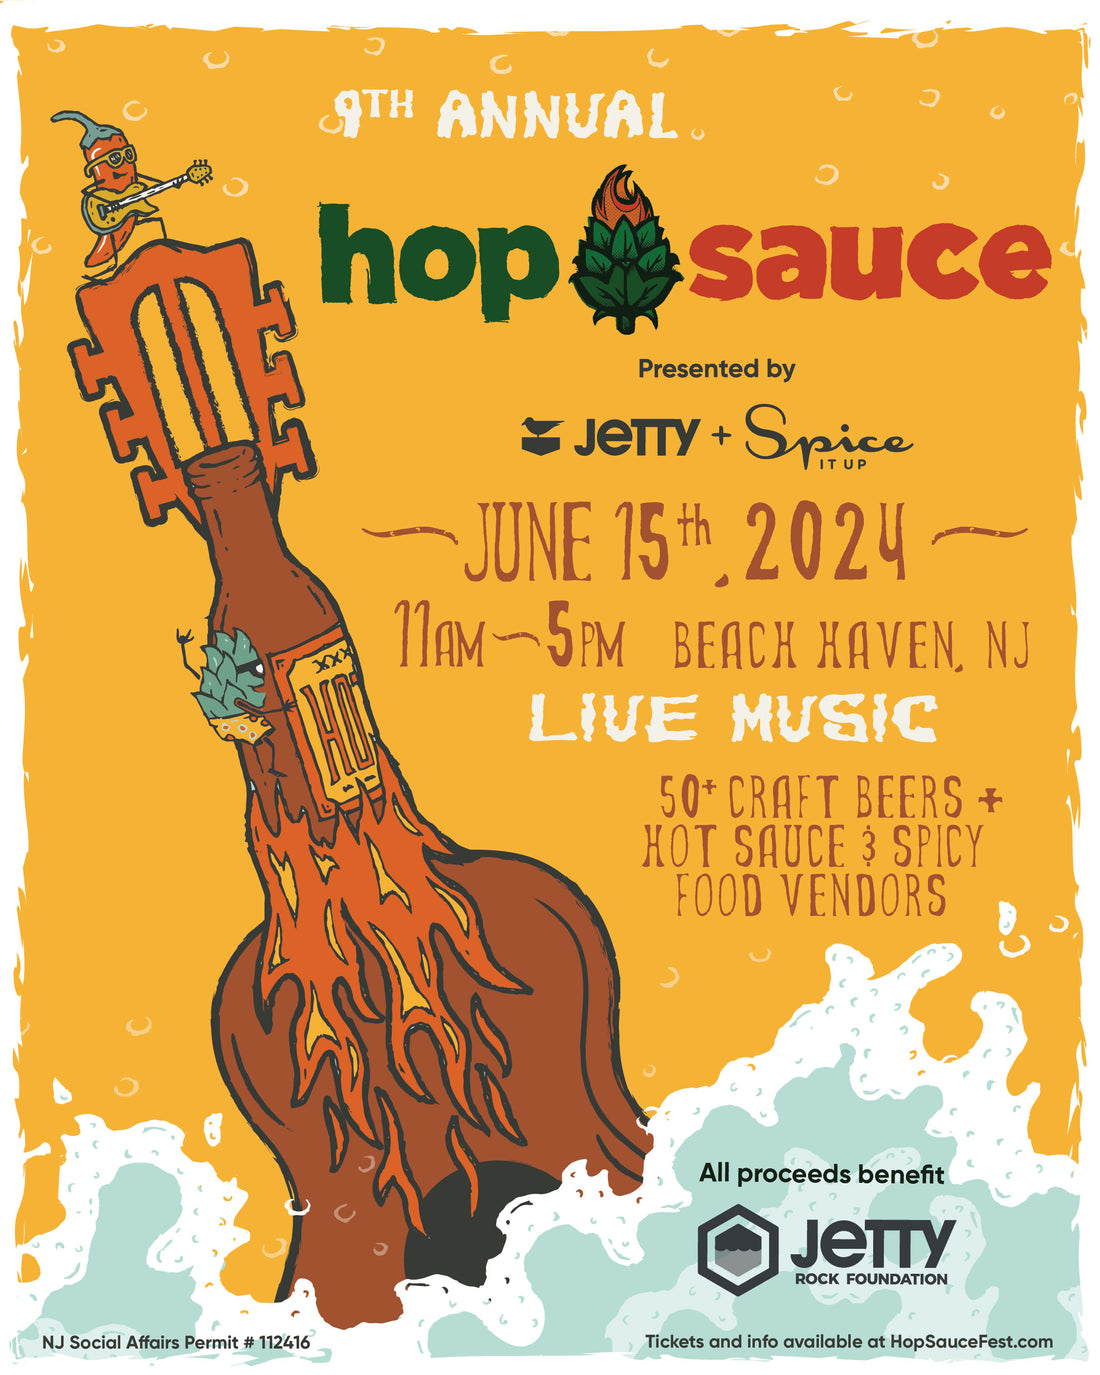 9th Annual HopSauce tiks On Sale!